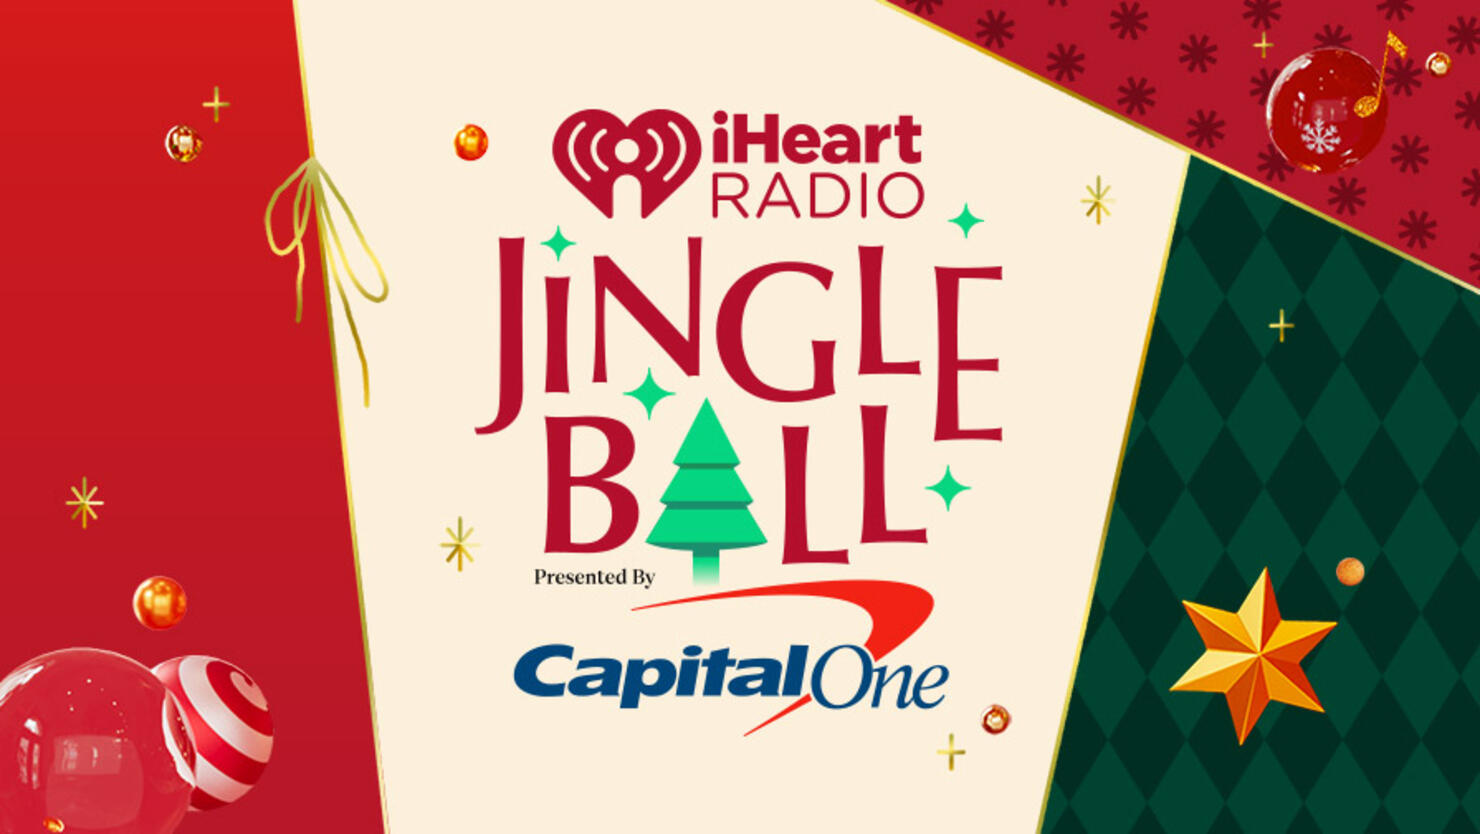 iHeartRadio Jingle Ball Presented By Capital One